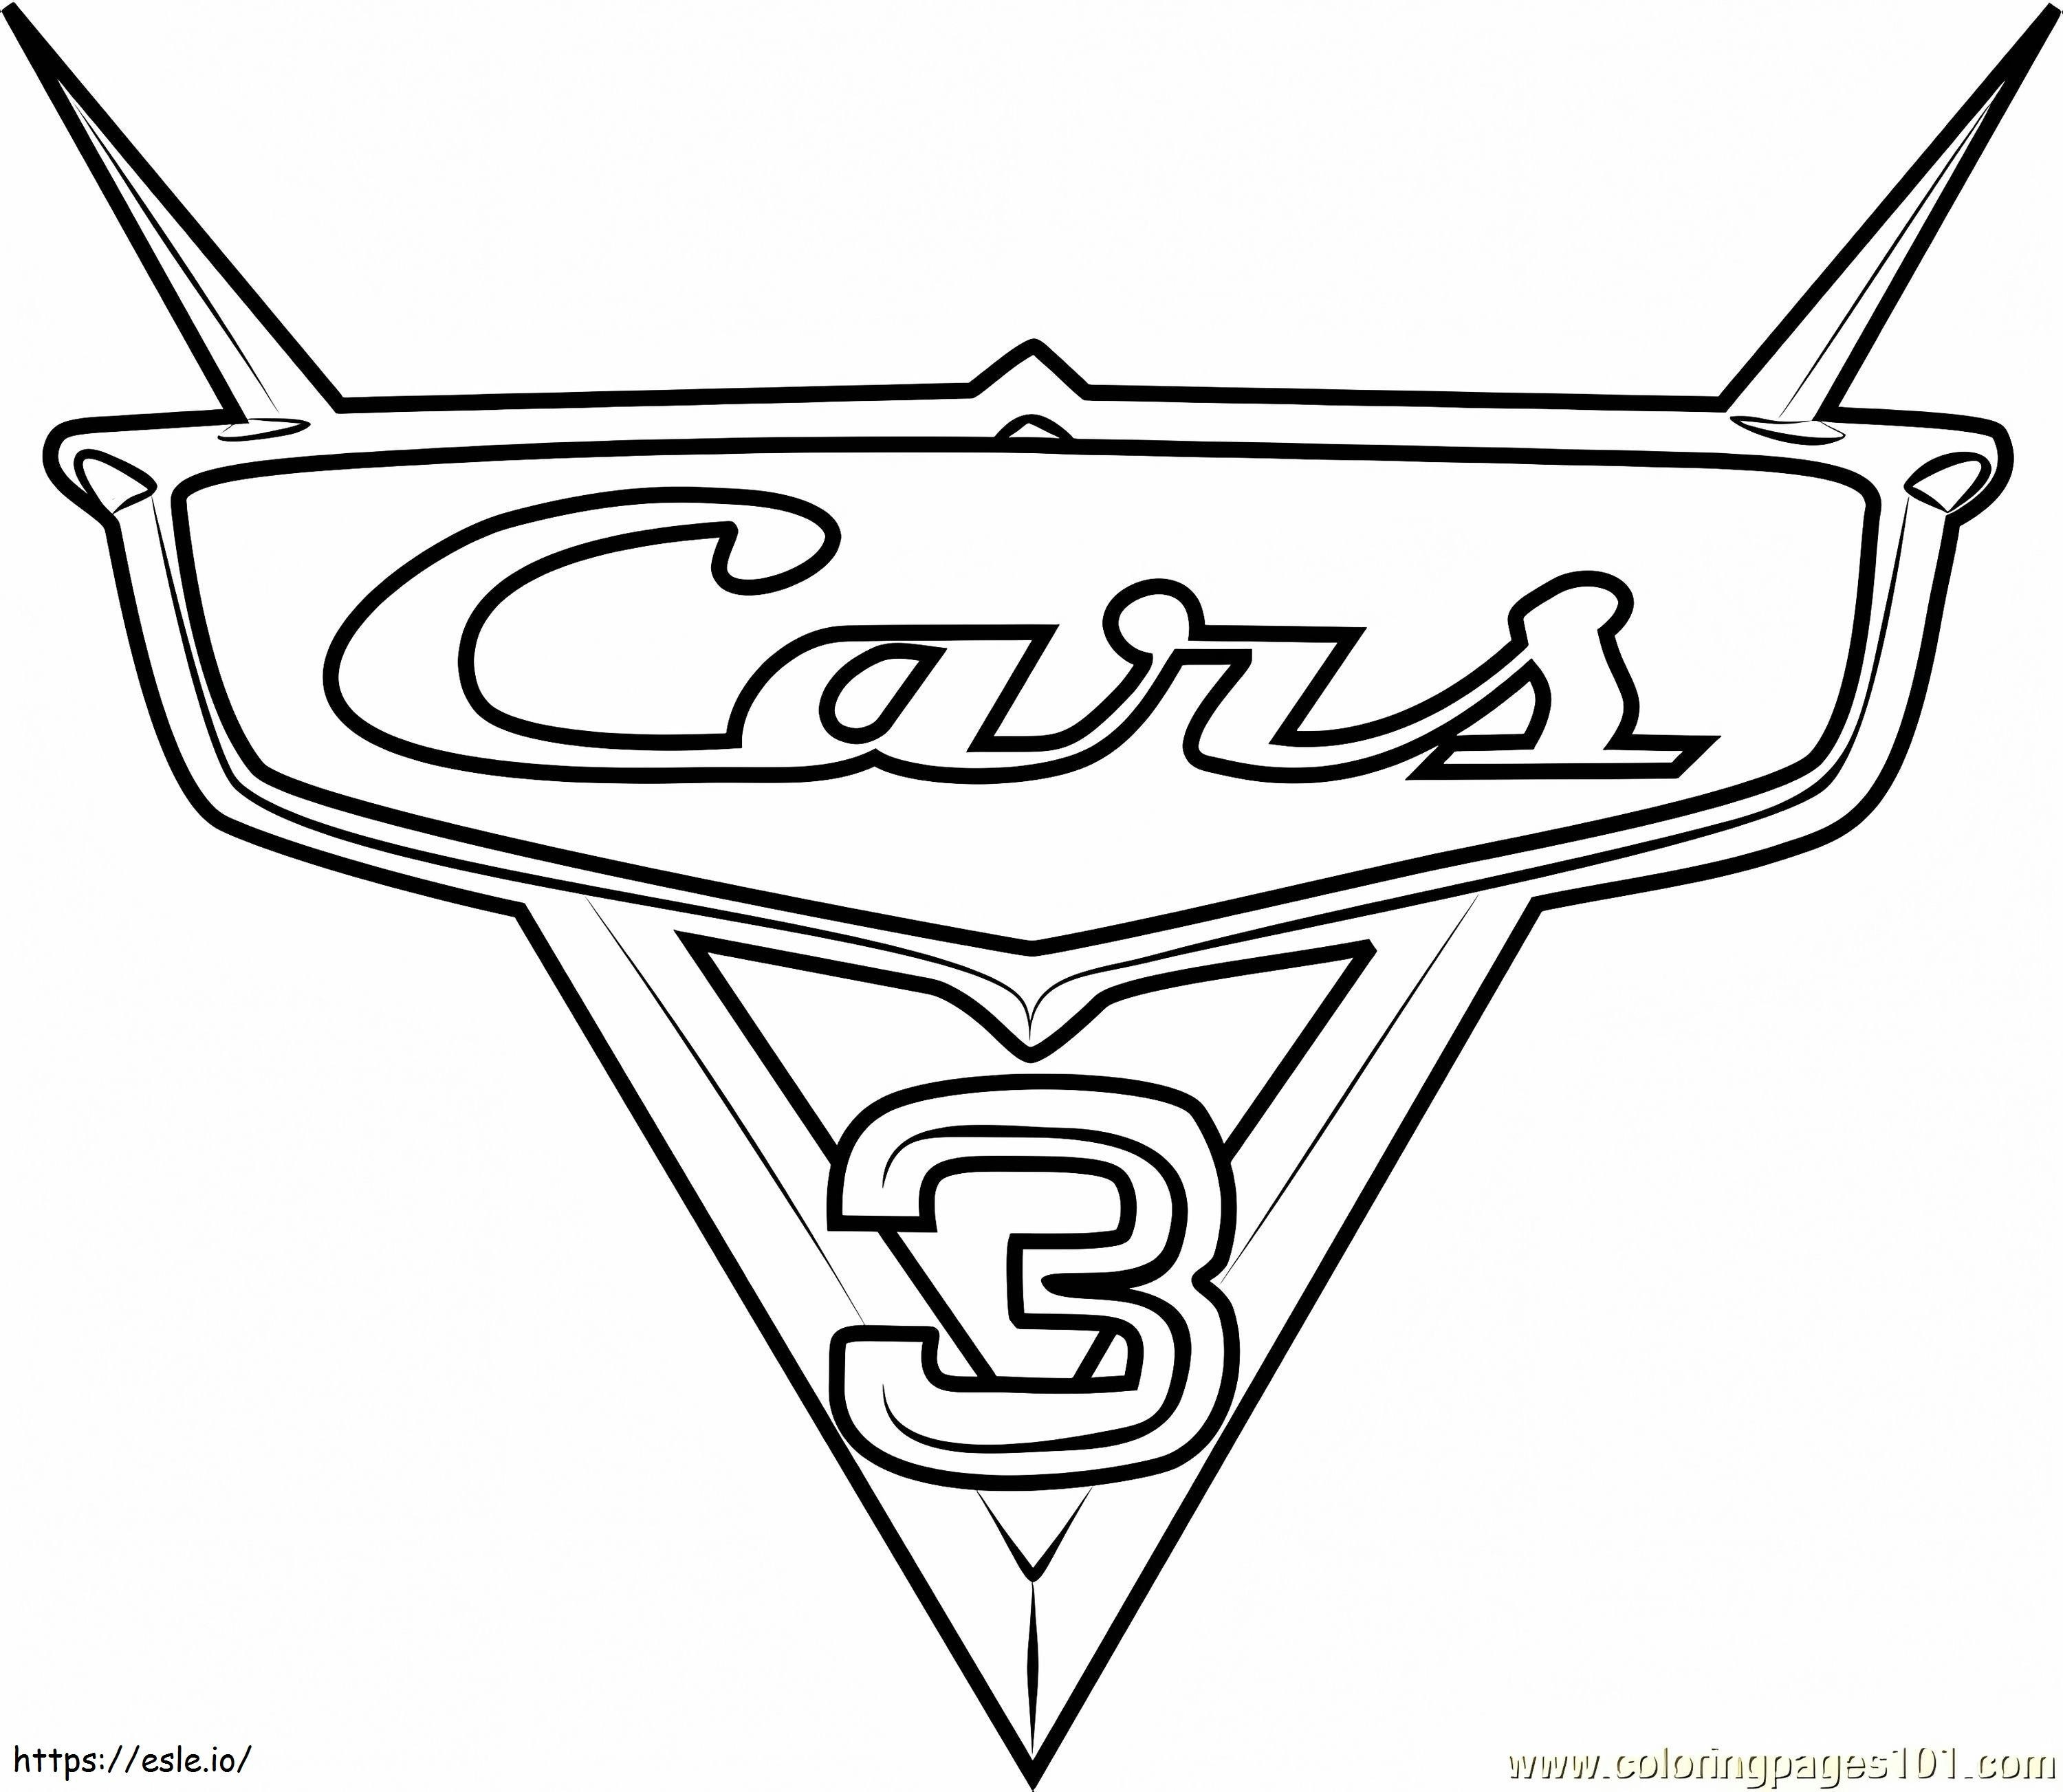 _Cars 3 Logo di Cars 31 da colorare